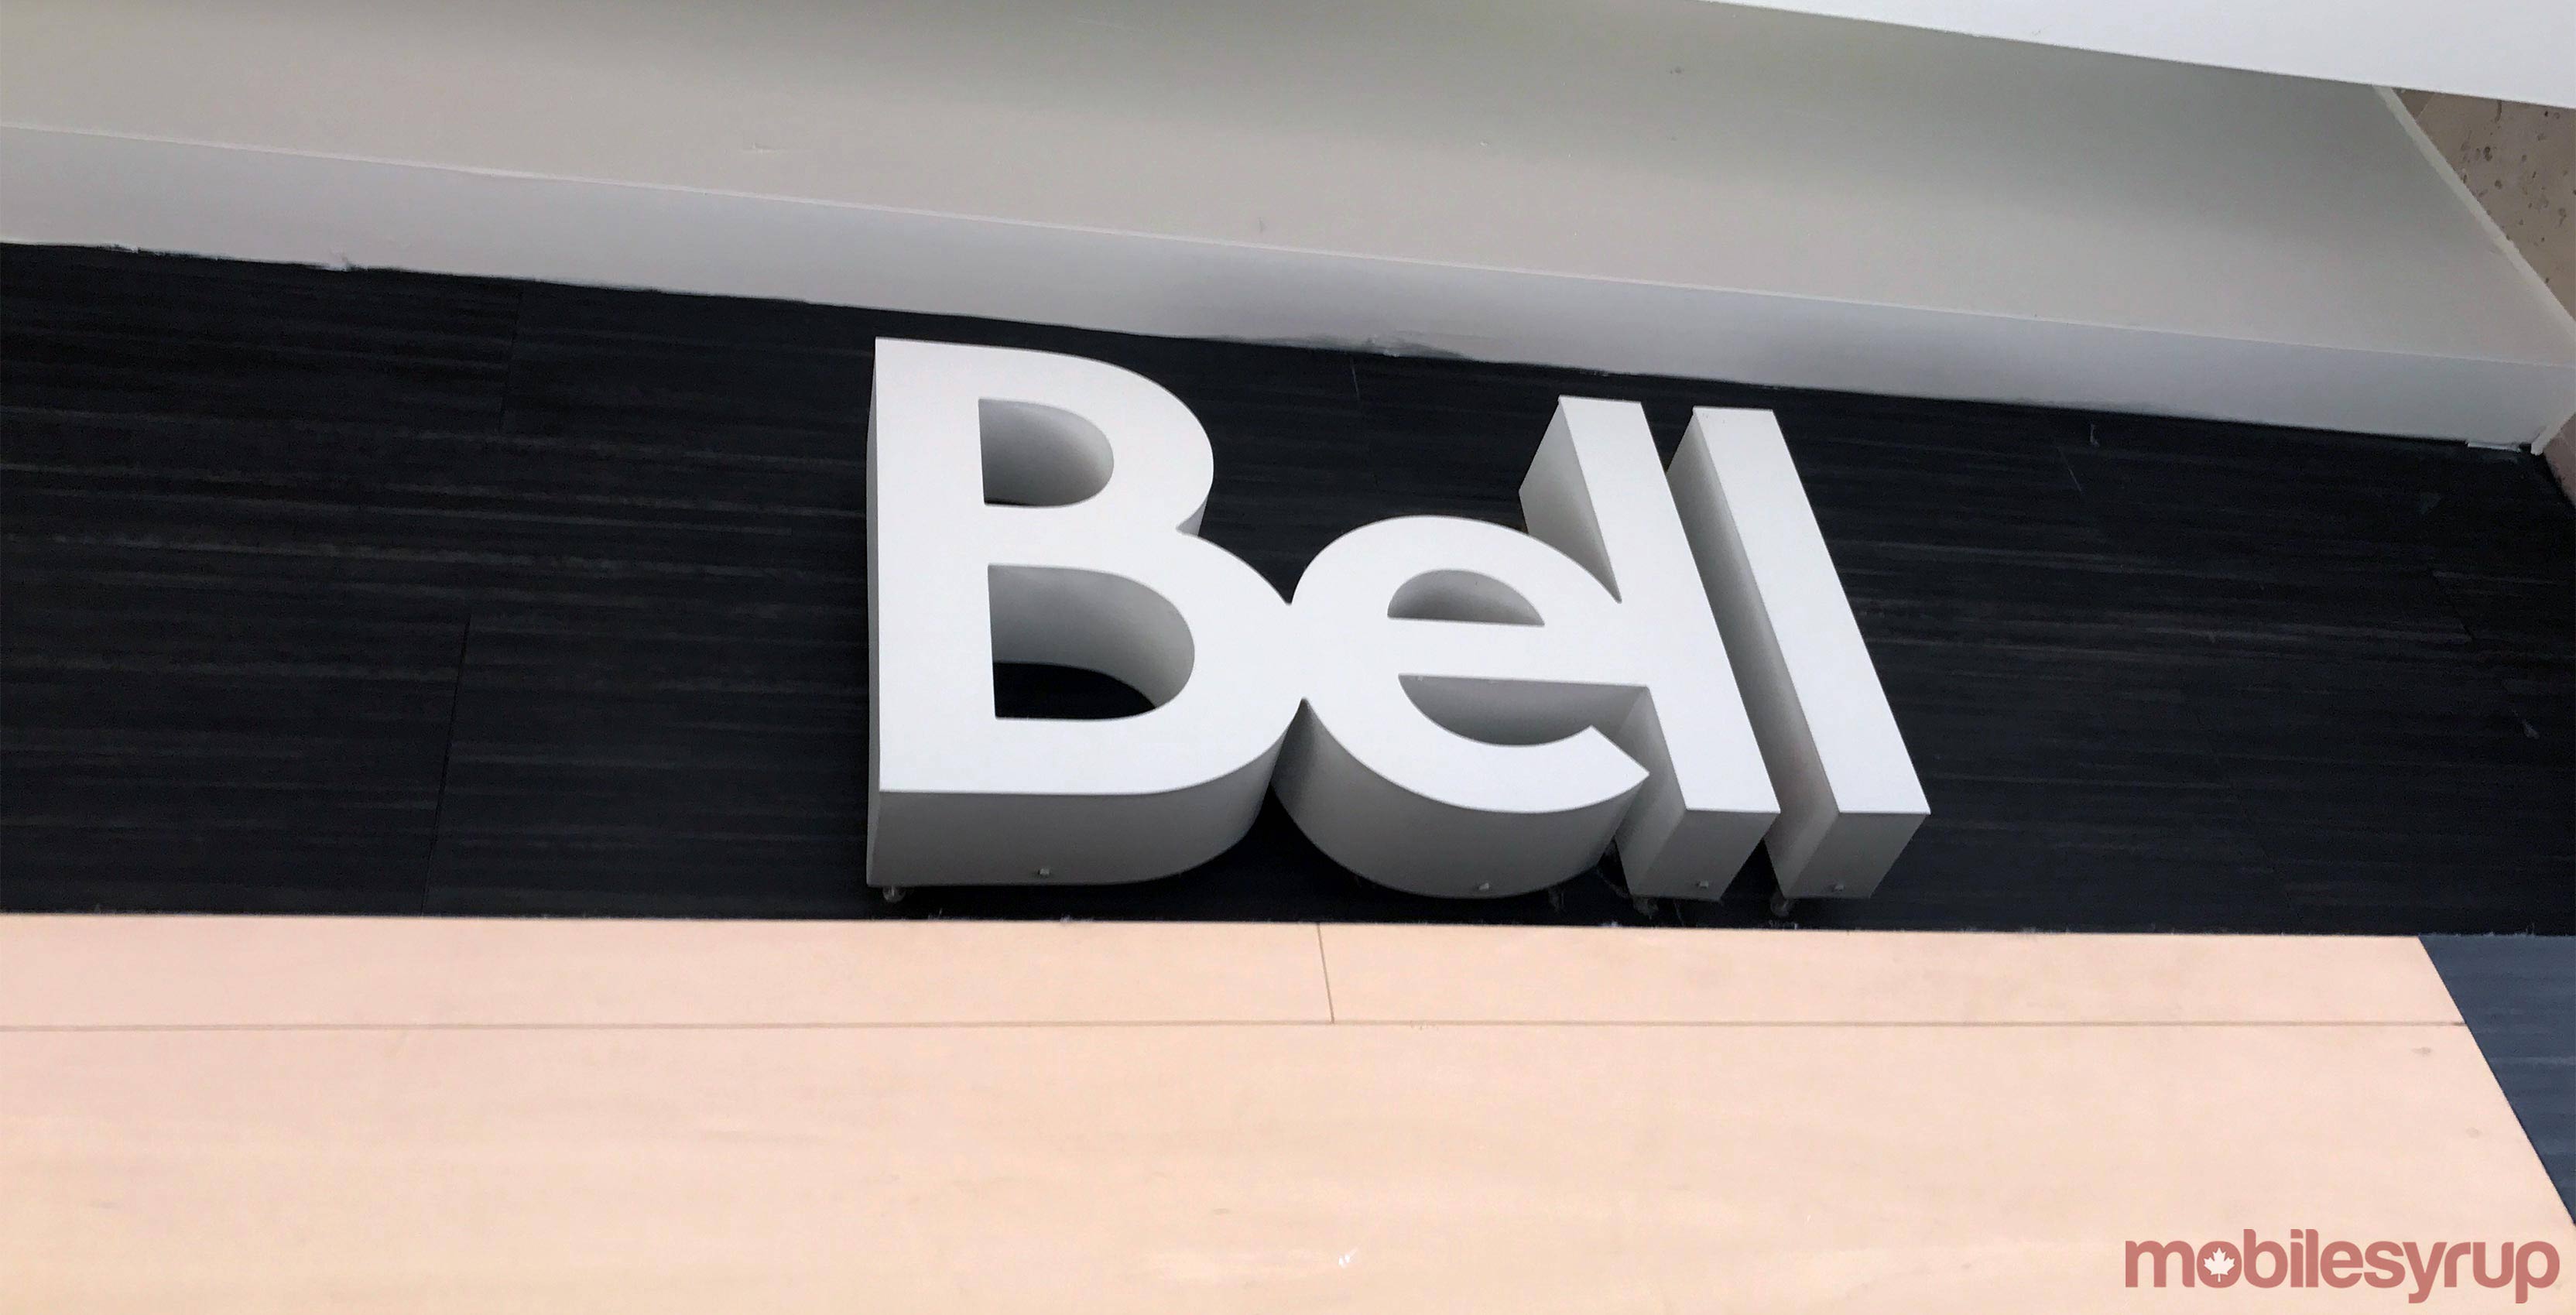 Bell logo on sign